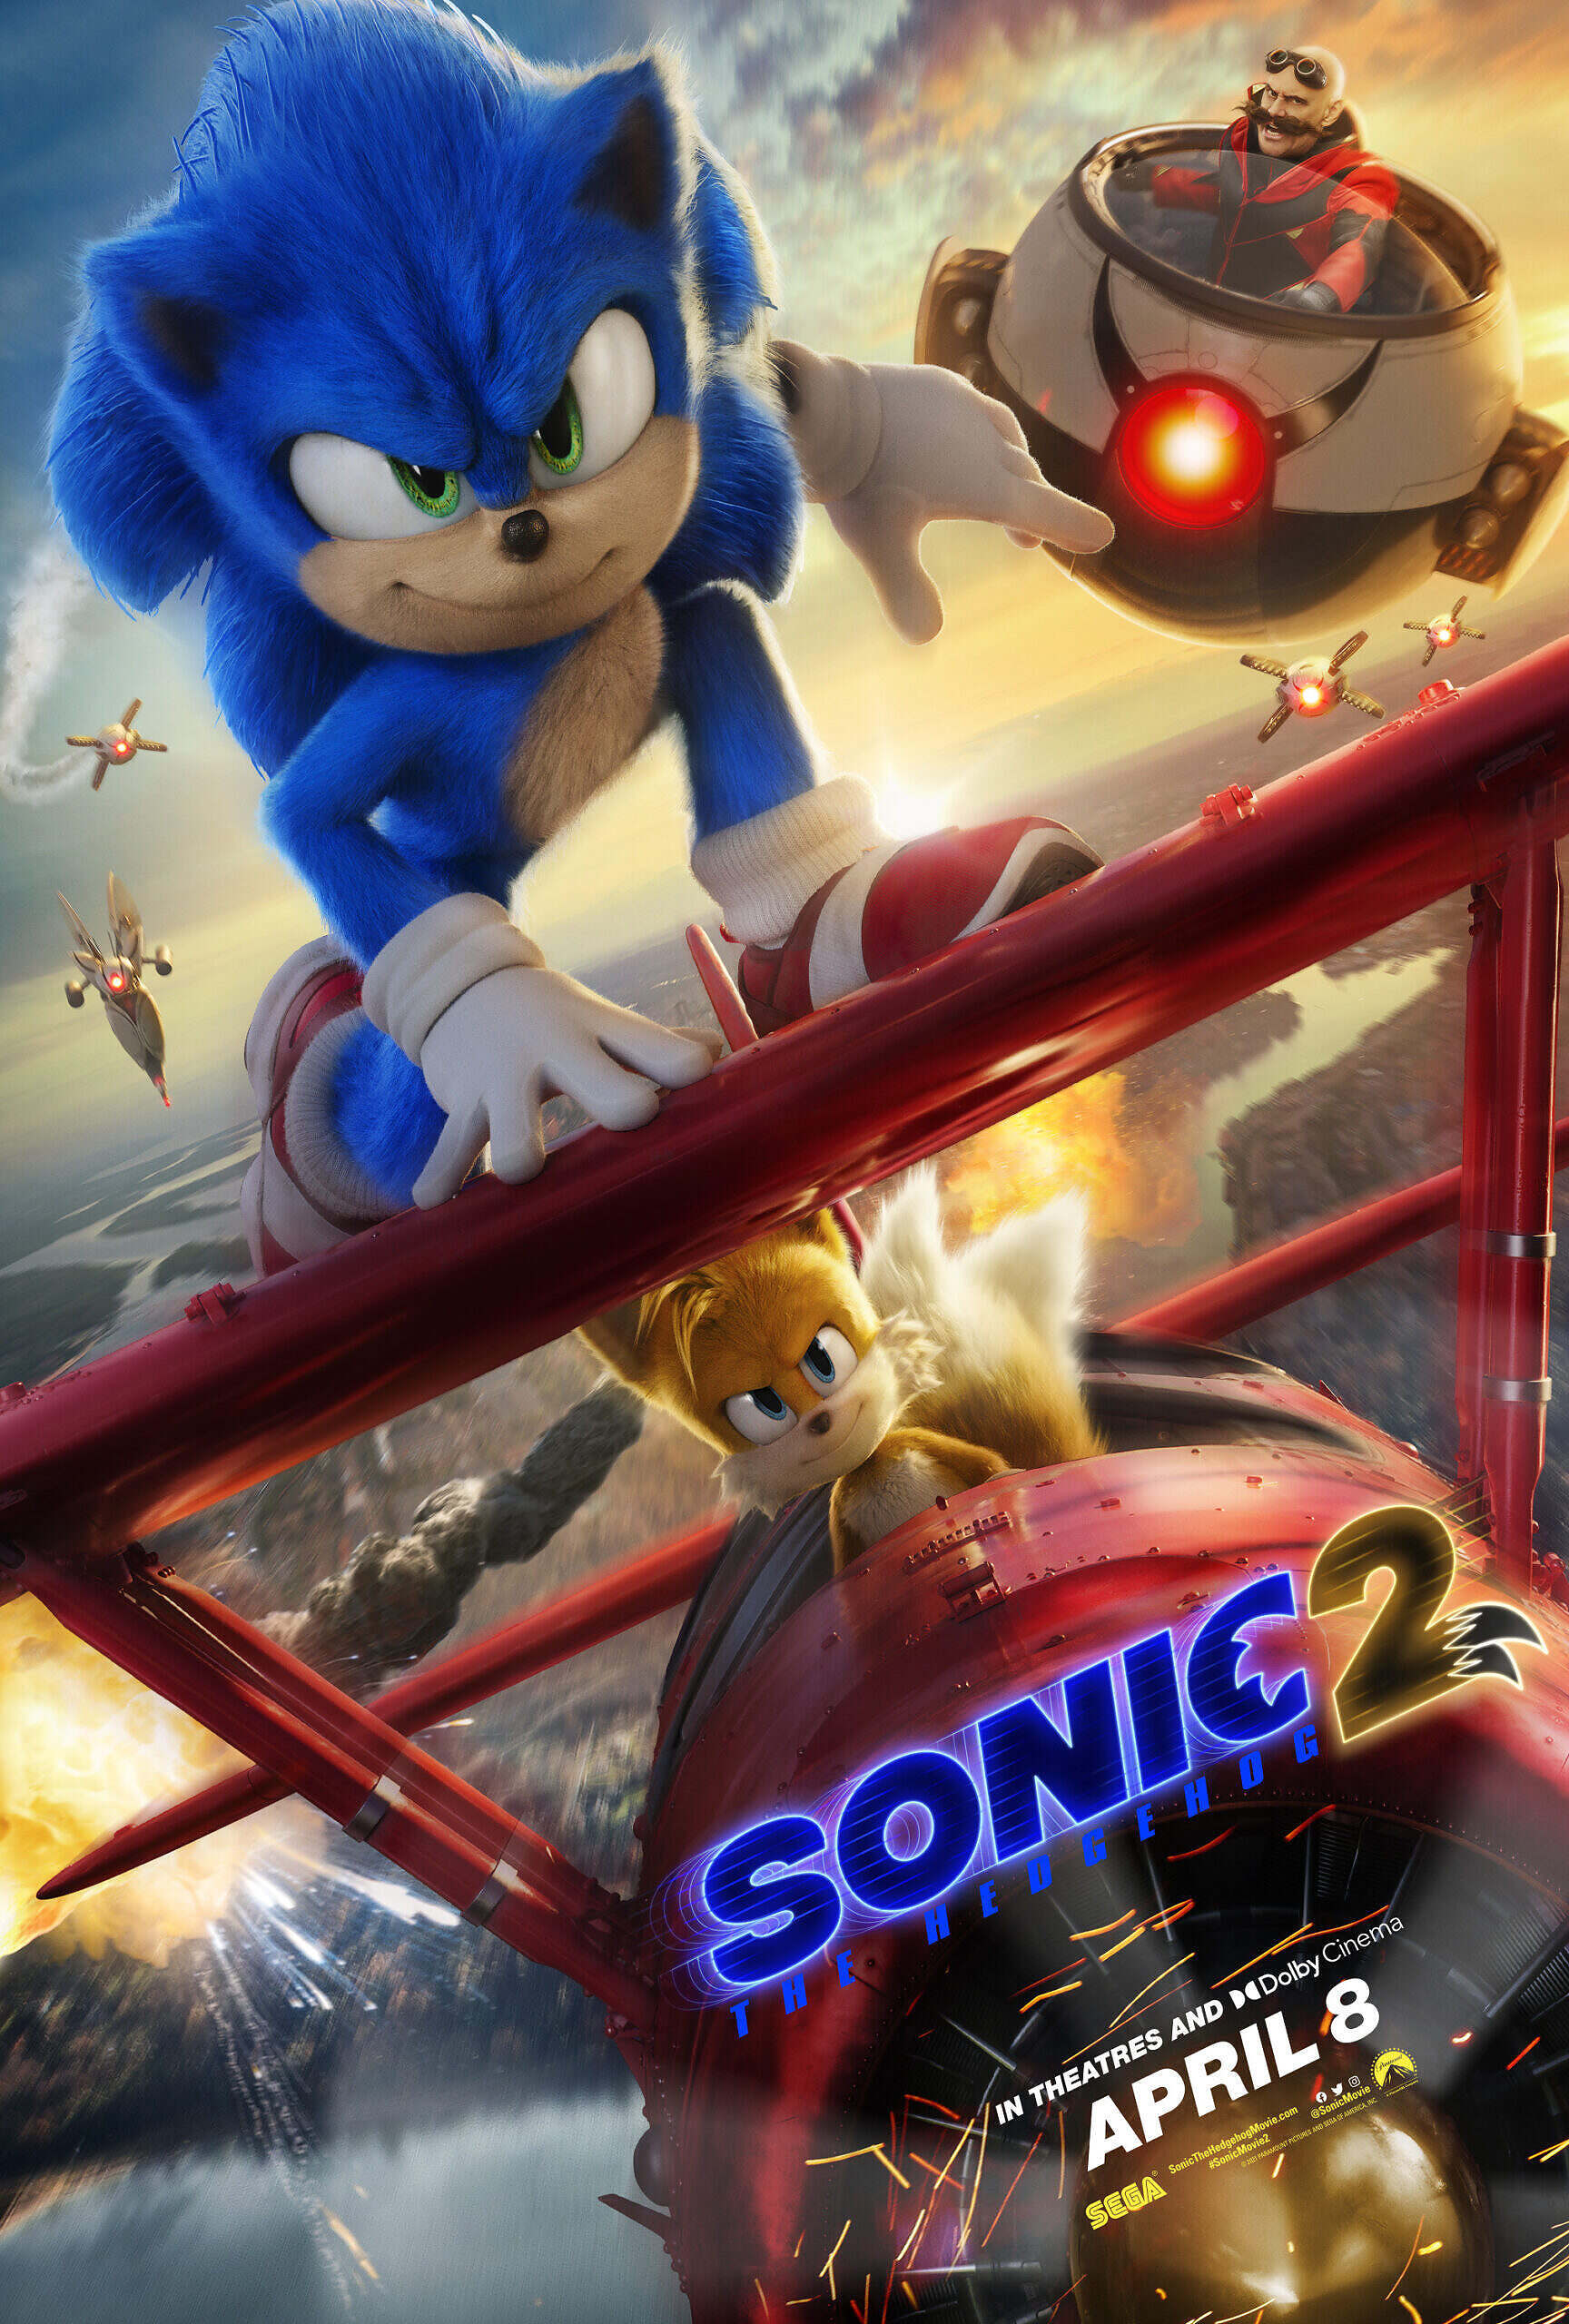 Teaser Trailer For 'Sonic The Hedgehog 2' Movie Starring Ben Schwartz, Idris Elba, & Jim Carrey